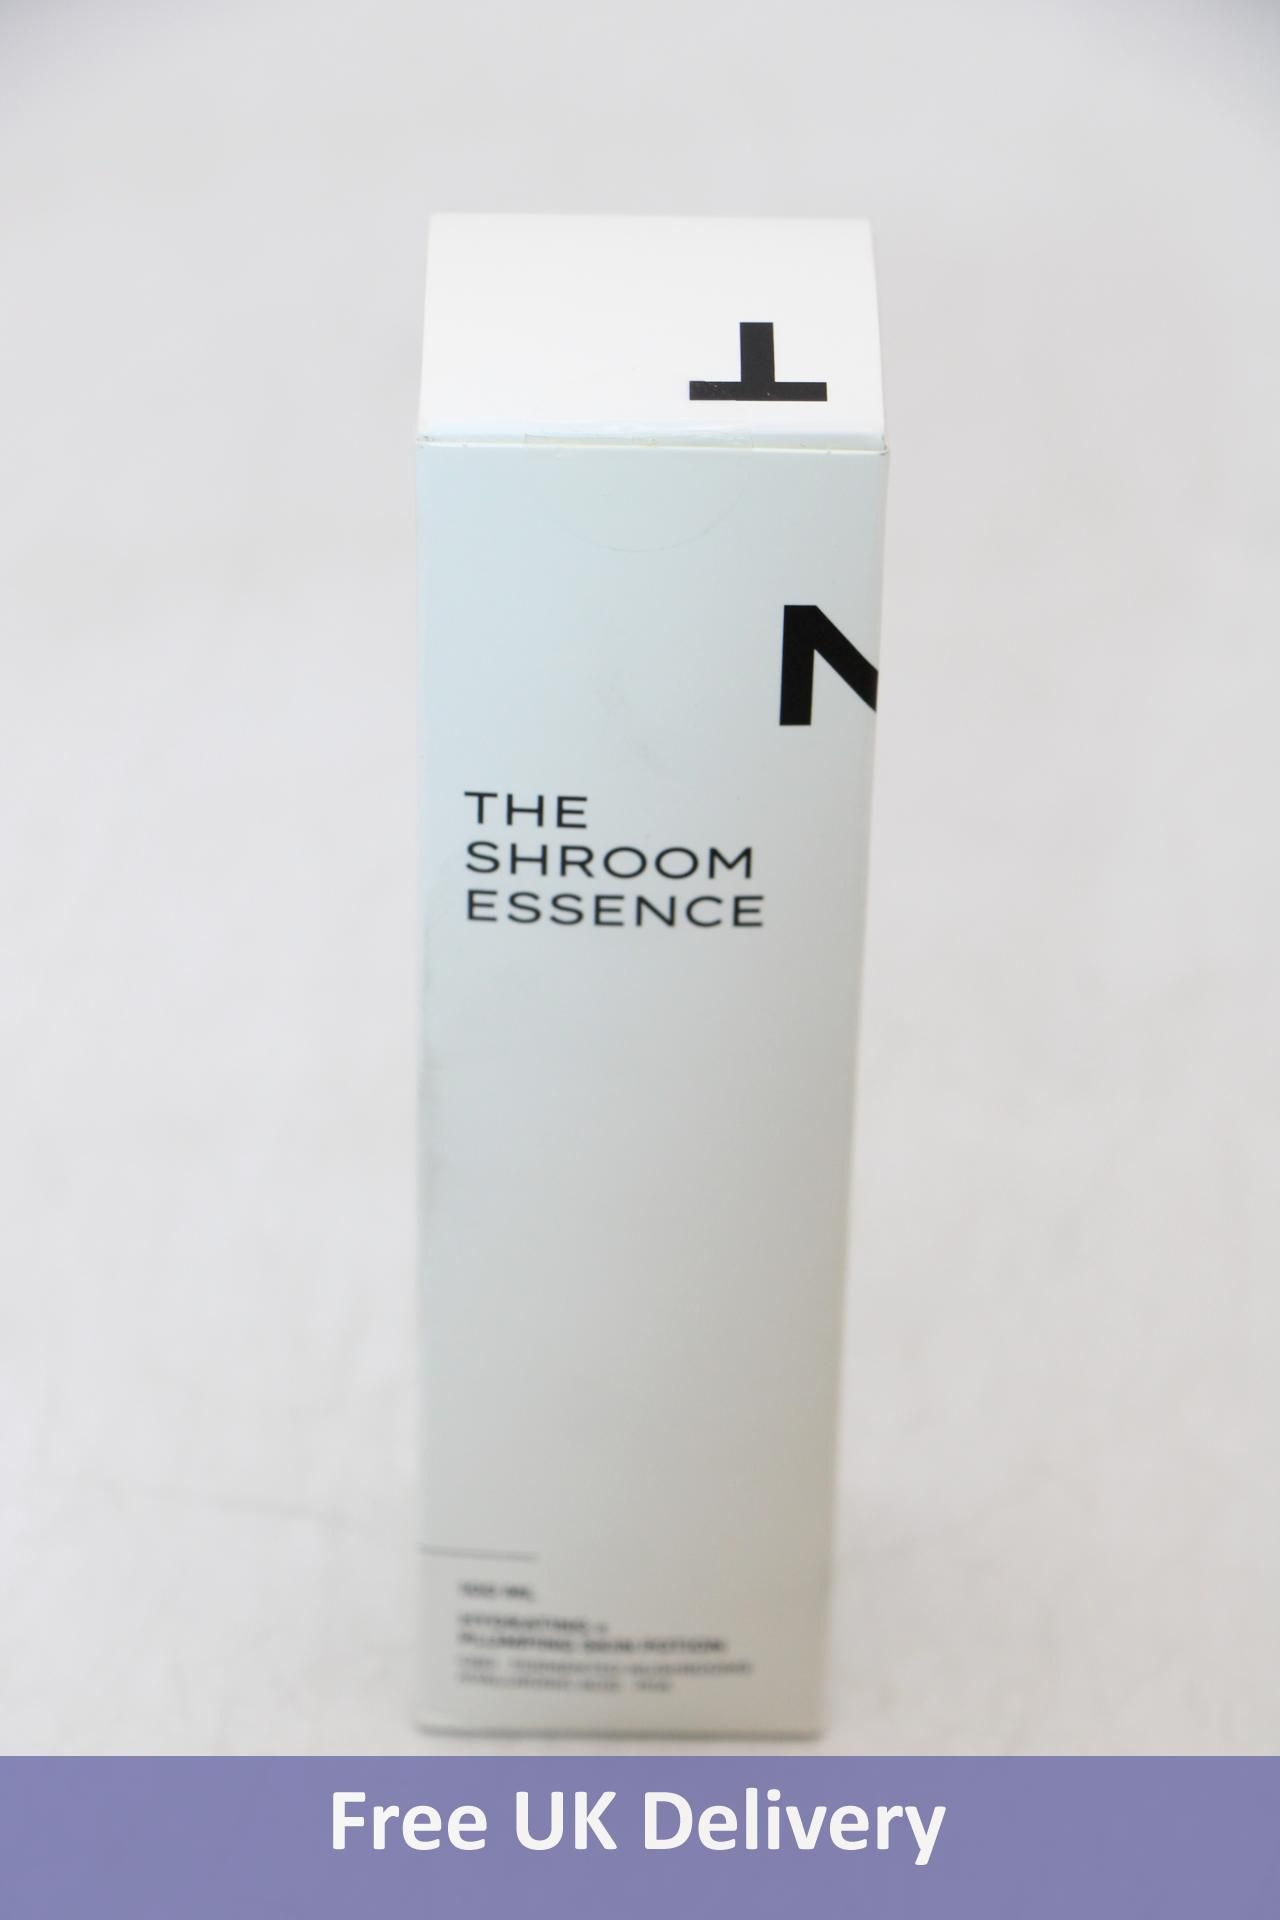 Ten Mantle The Shroom Essence Bottle Hydrating x Plumping Skin Potion Cbd, Size 100ml - Image 4 of 10